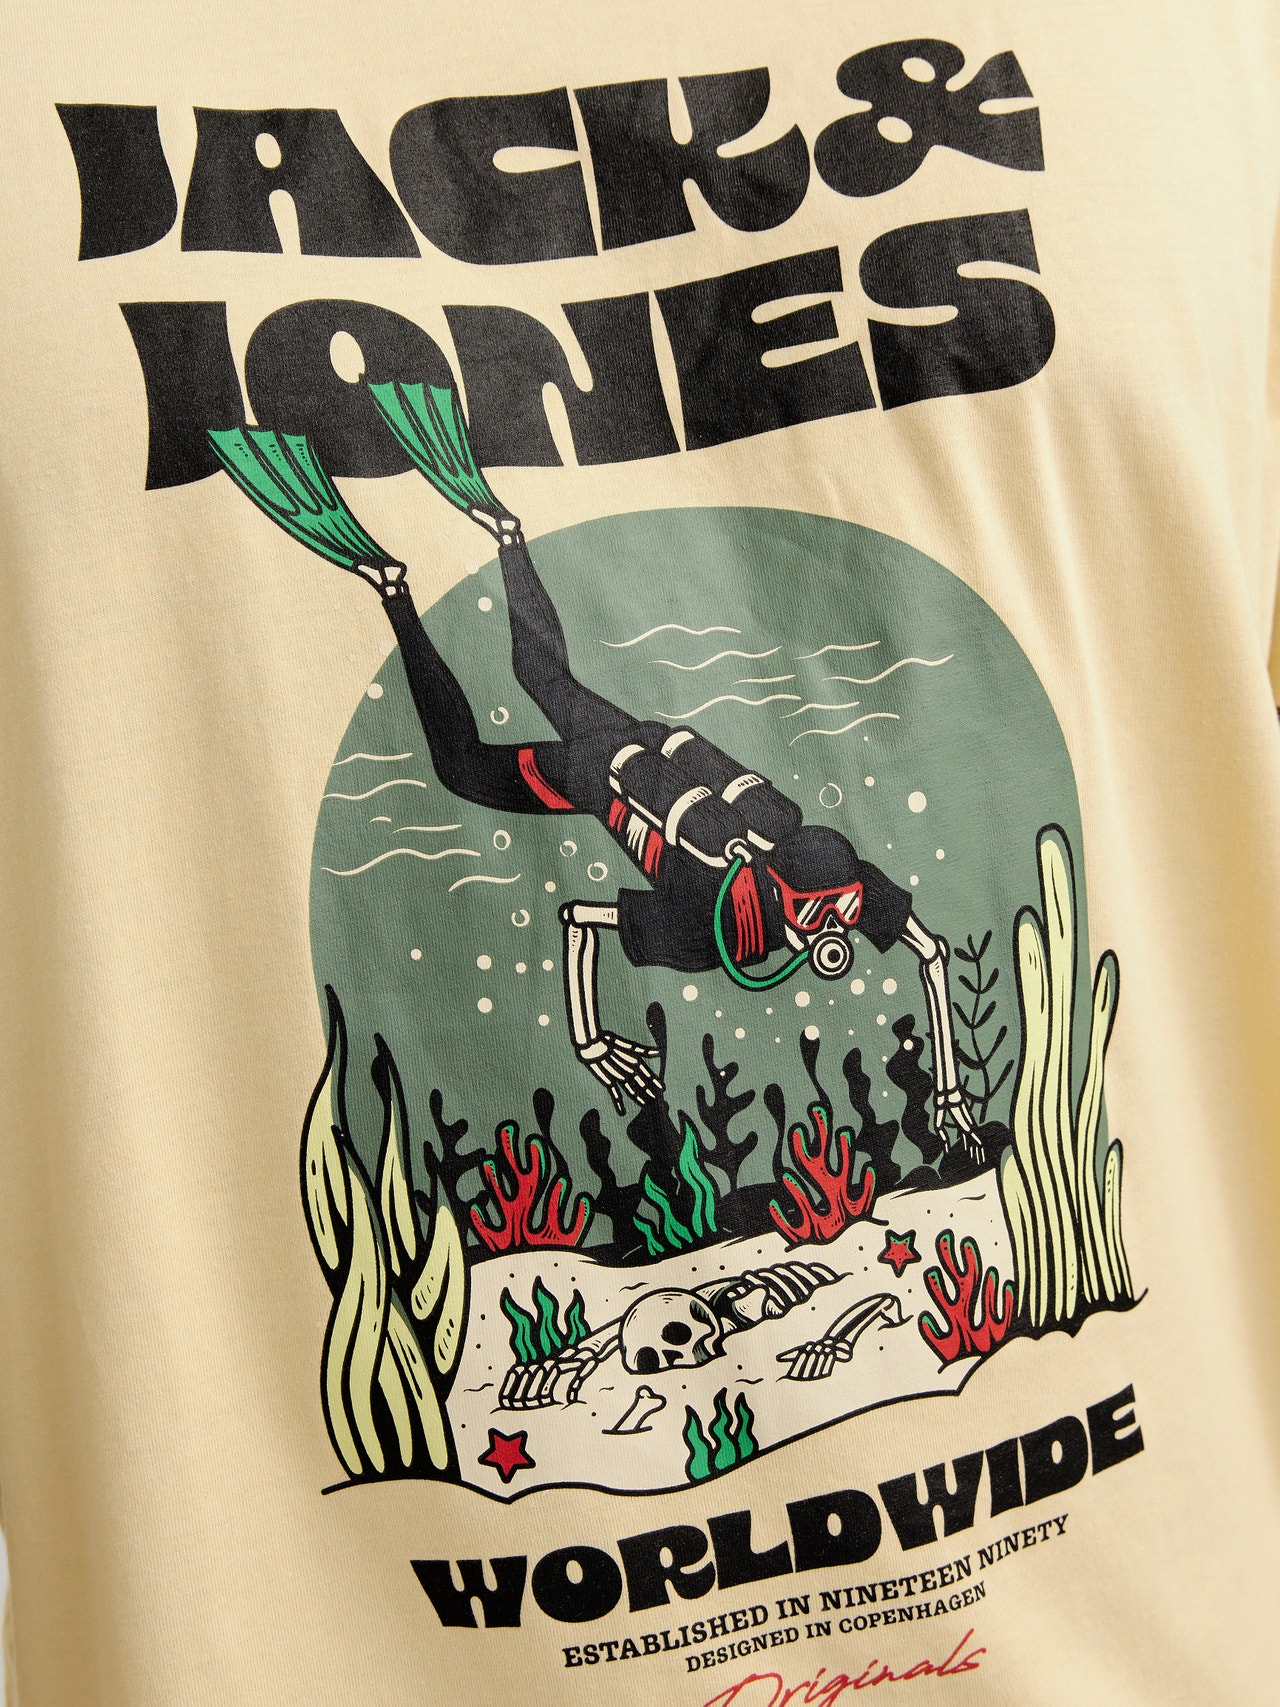 Jack & Jones Plus Size Gedruckt T-shirt -Italian Straw - 12261542